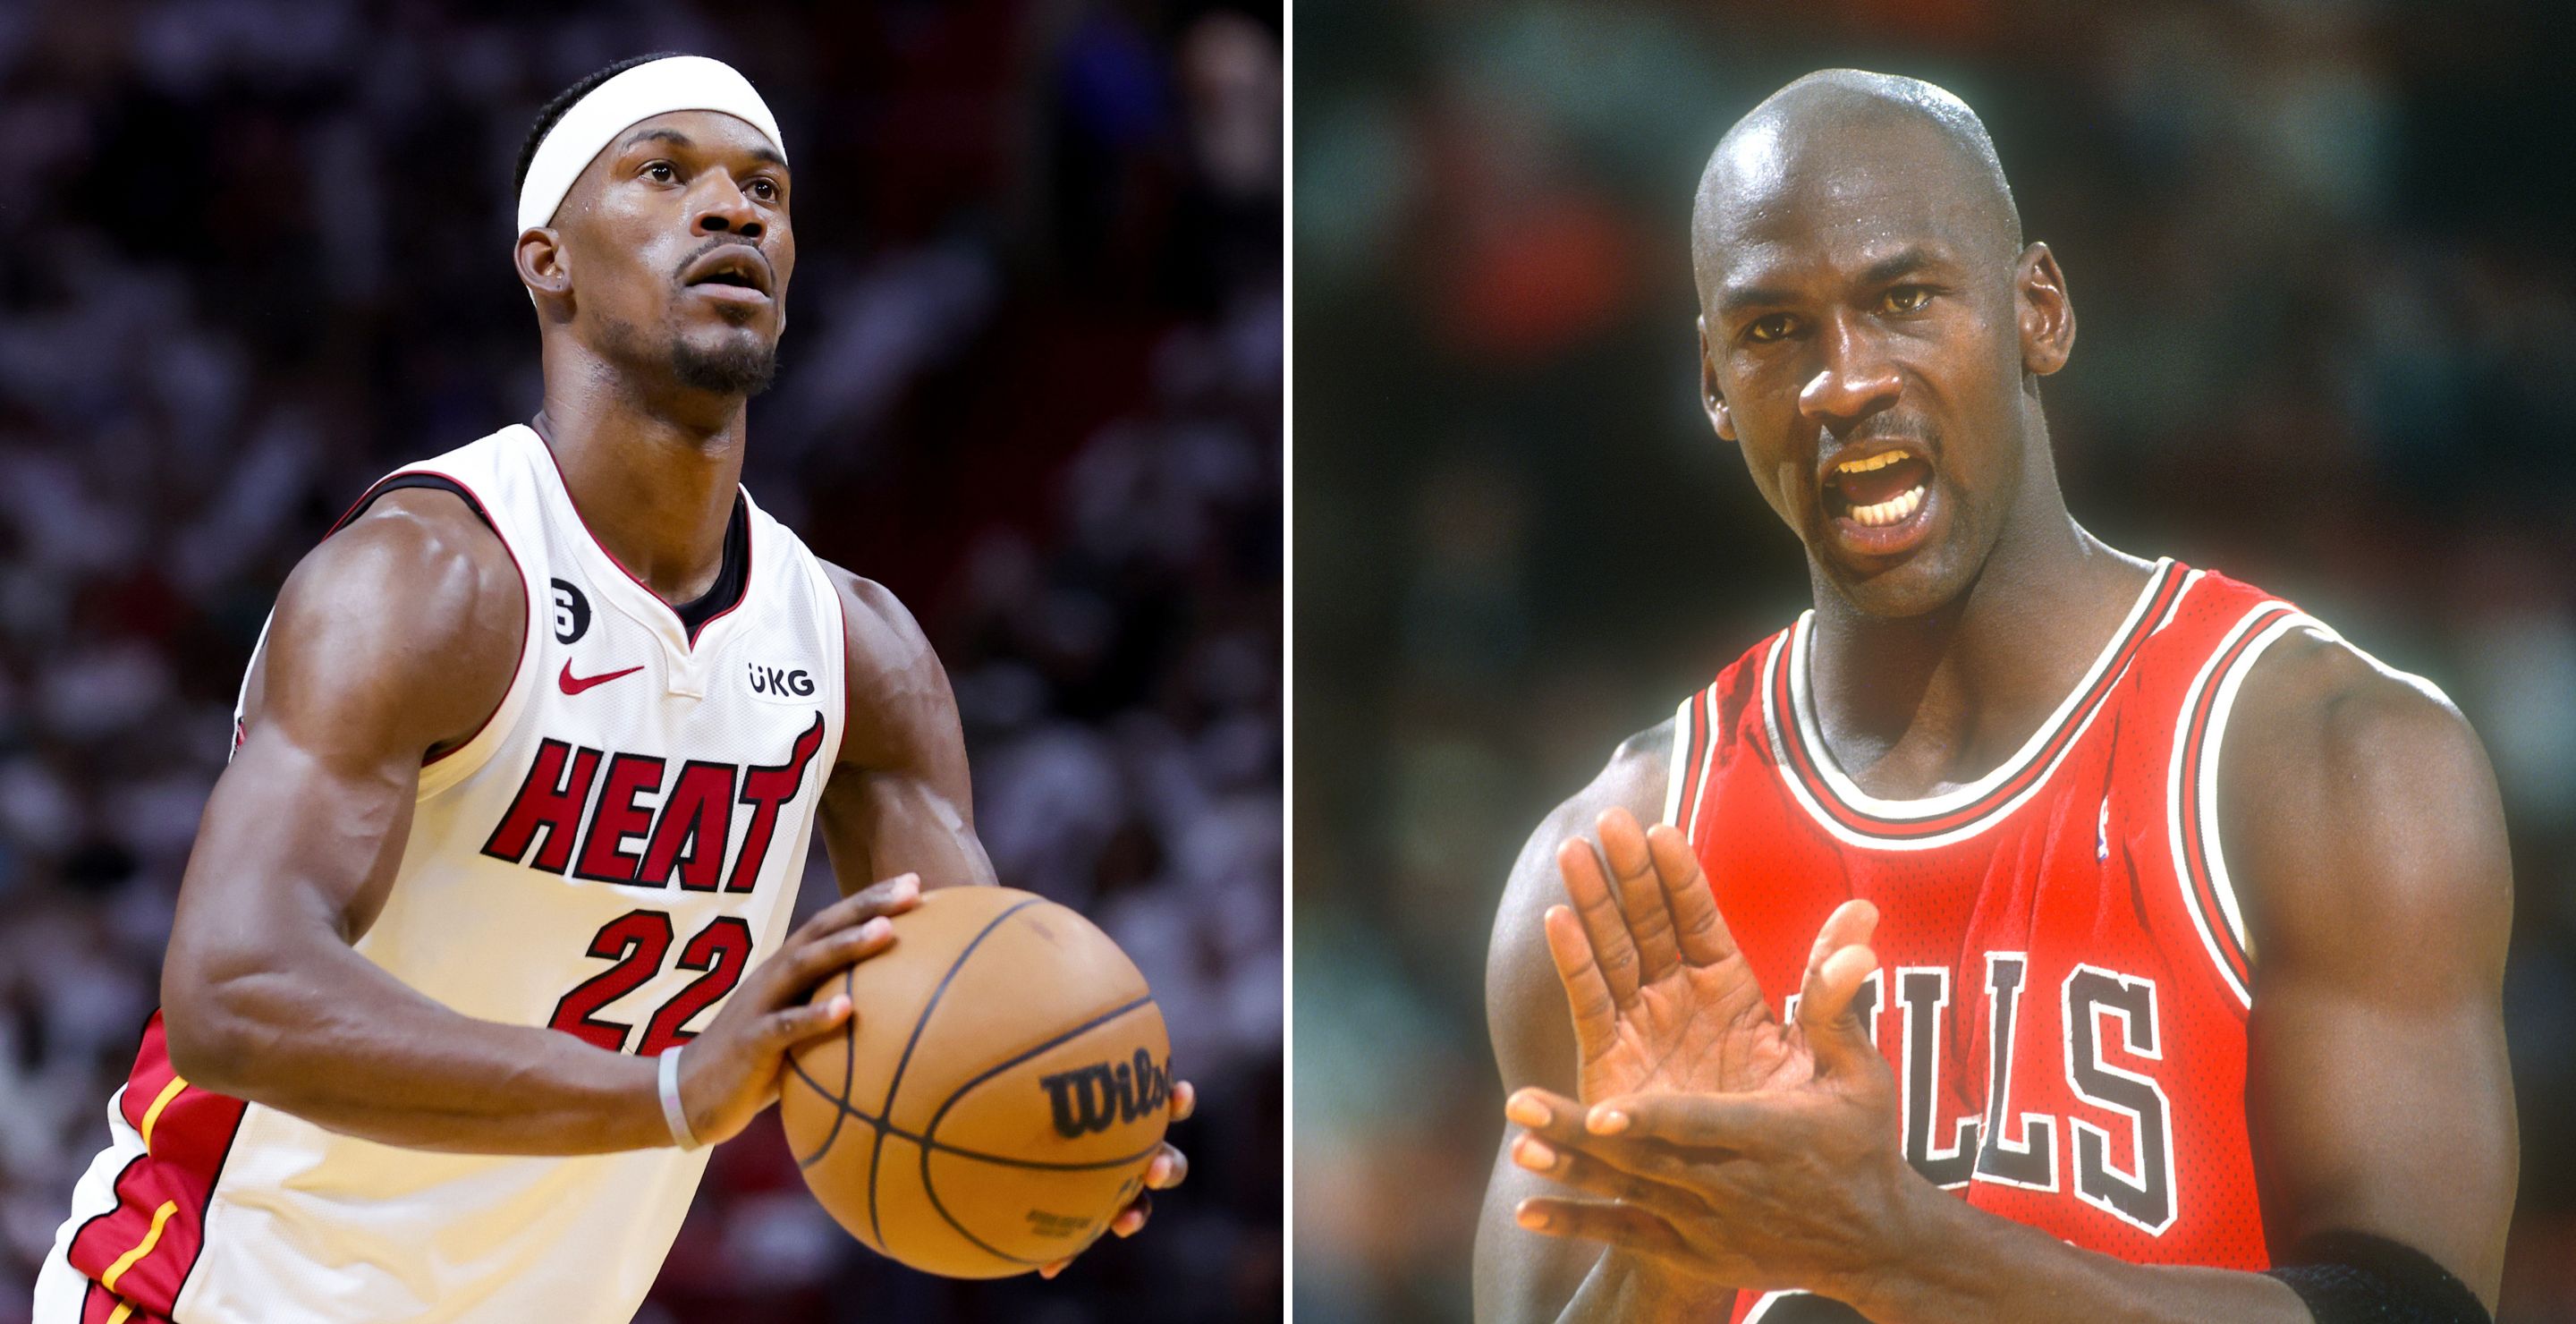 Miami Heat: Taking a look at Michael Jordan's best game against Heat